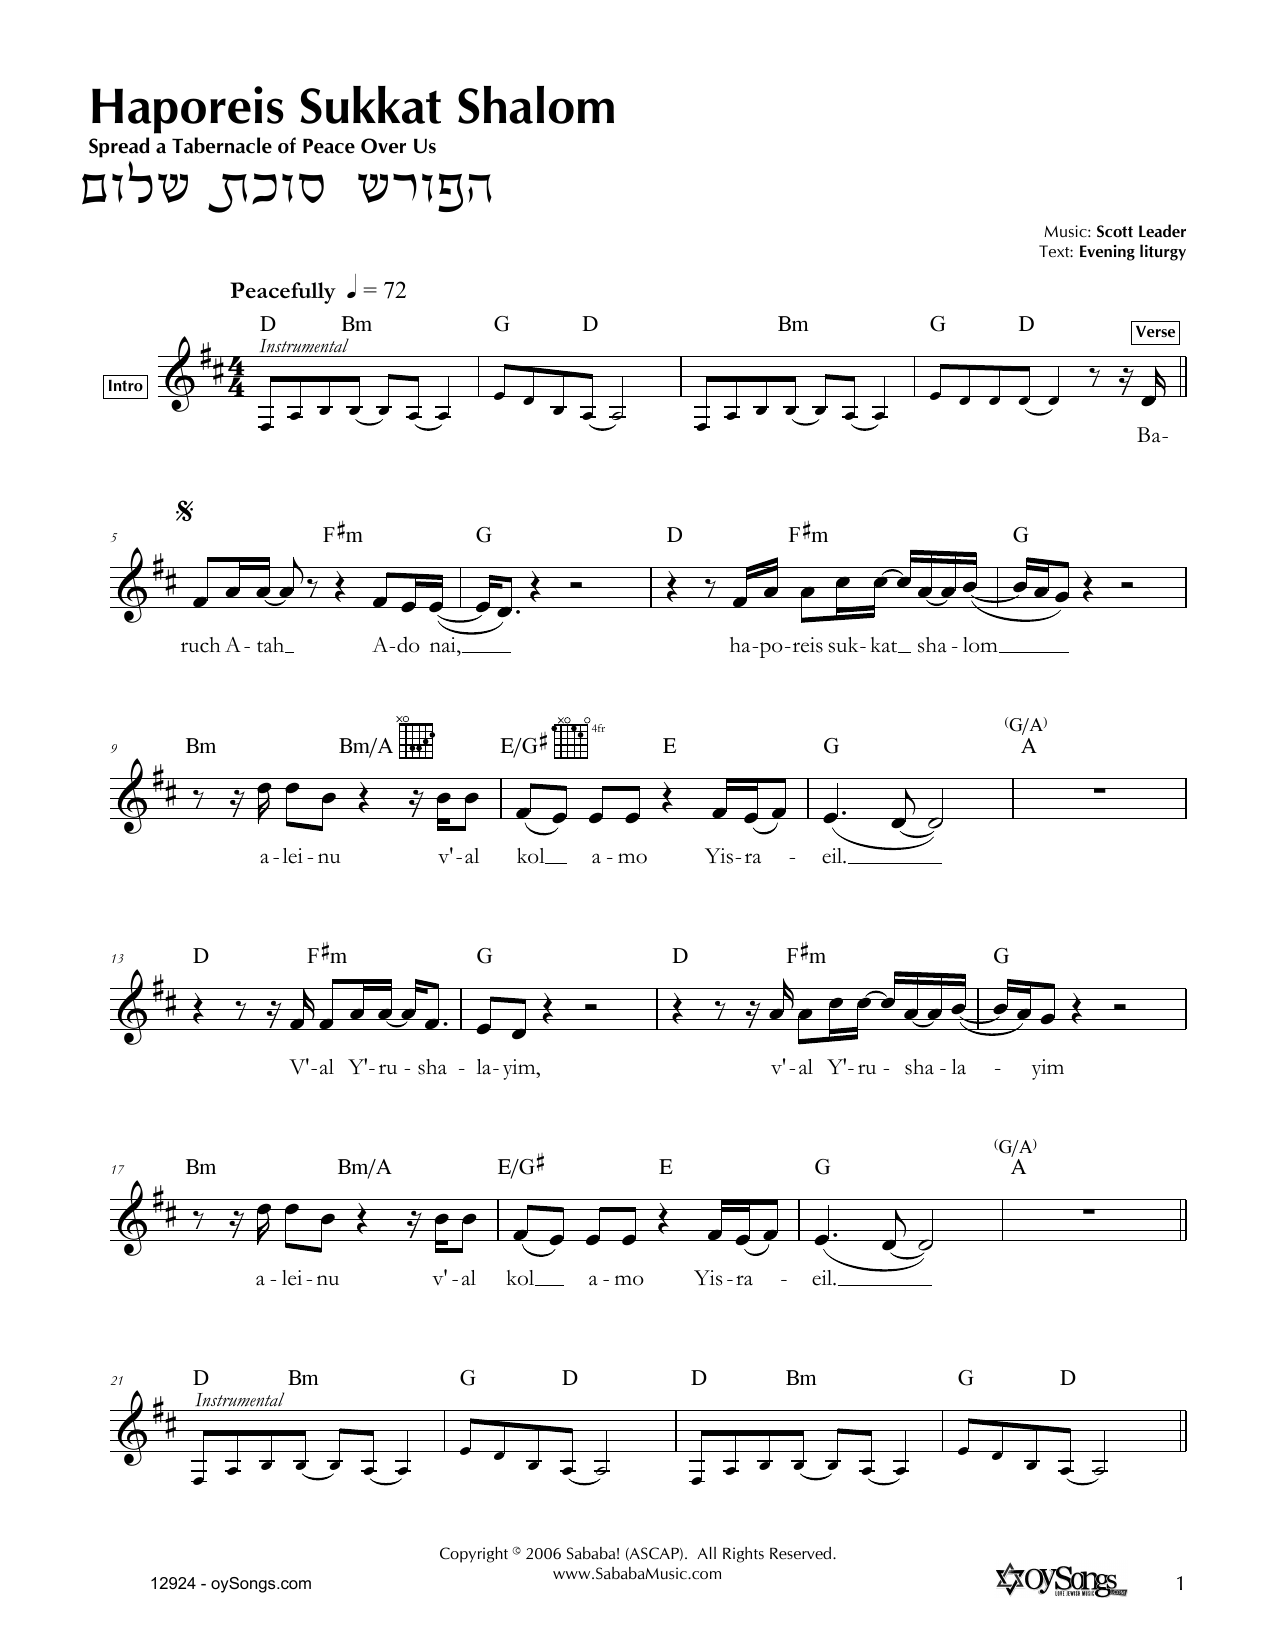 Scott Leader Haporeis Sukkat Shalom Sheet Music Notes & Chords for Melody Line, Lyrics & Chords - Download or Print PDF